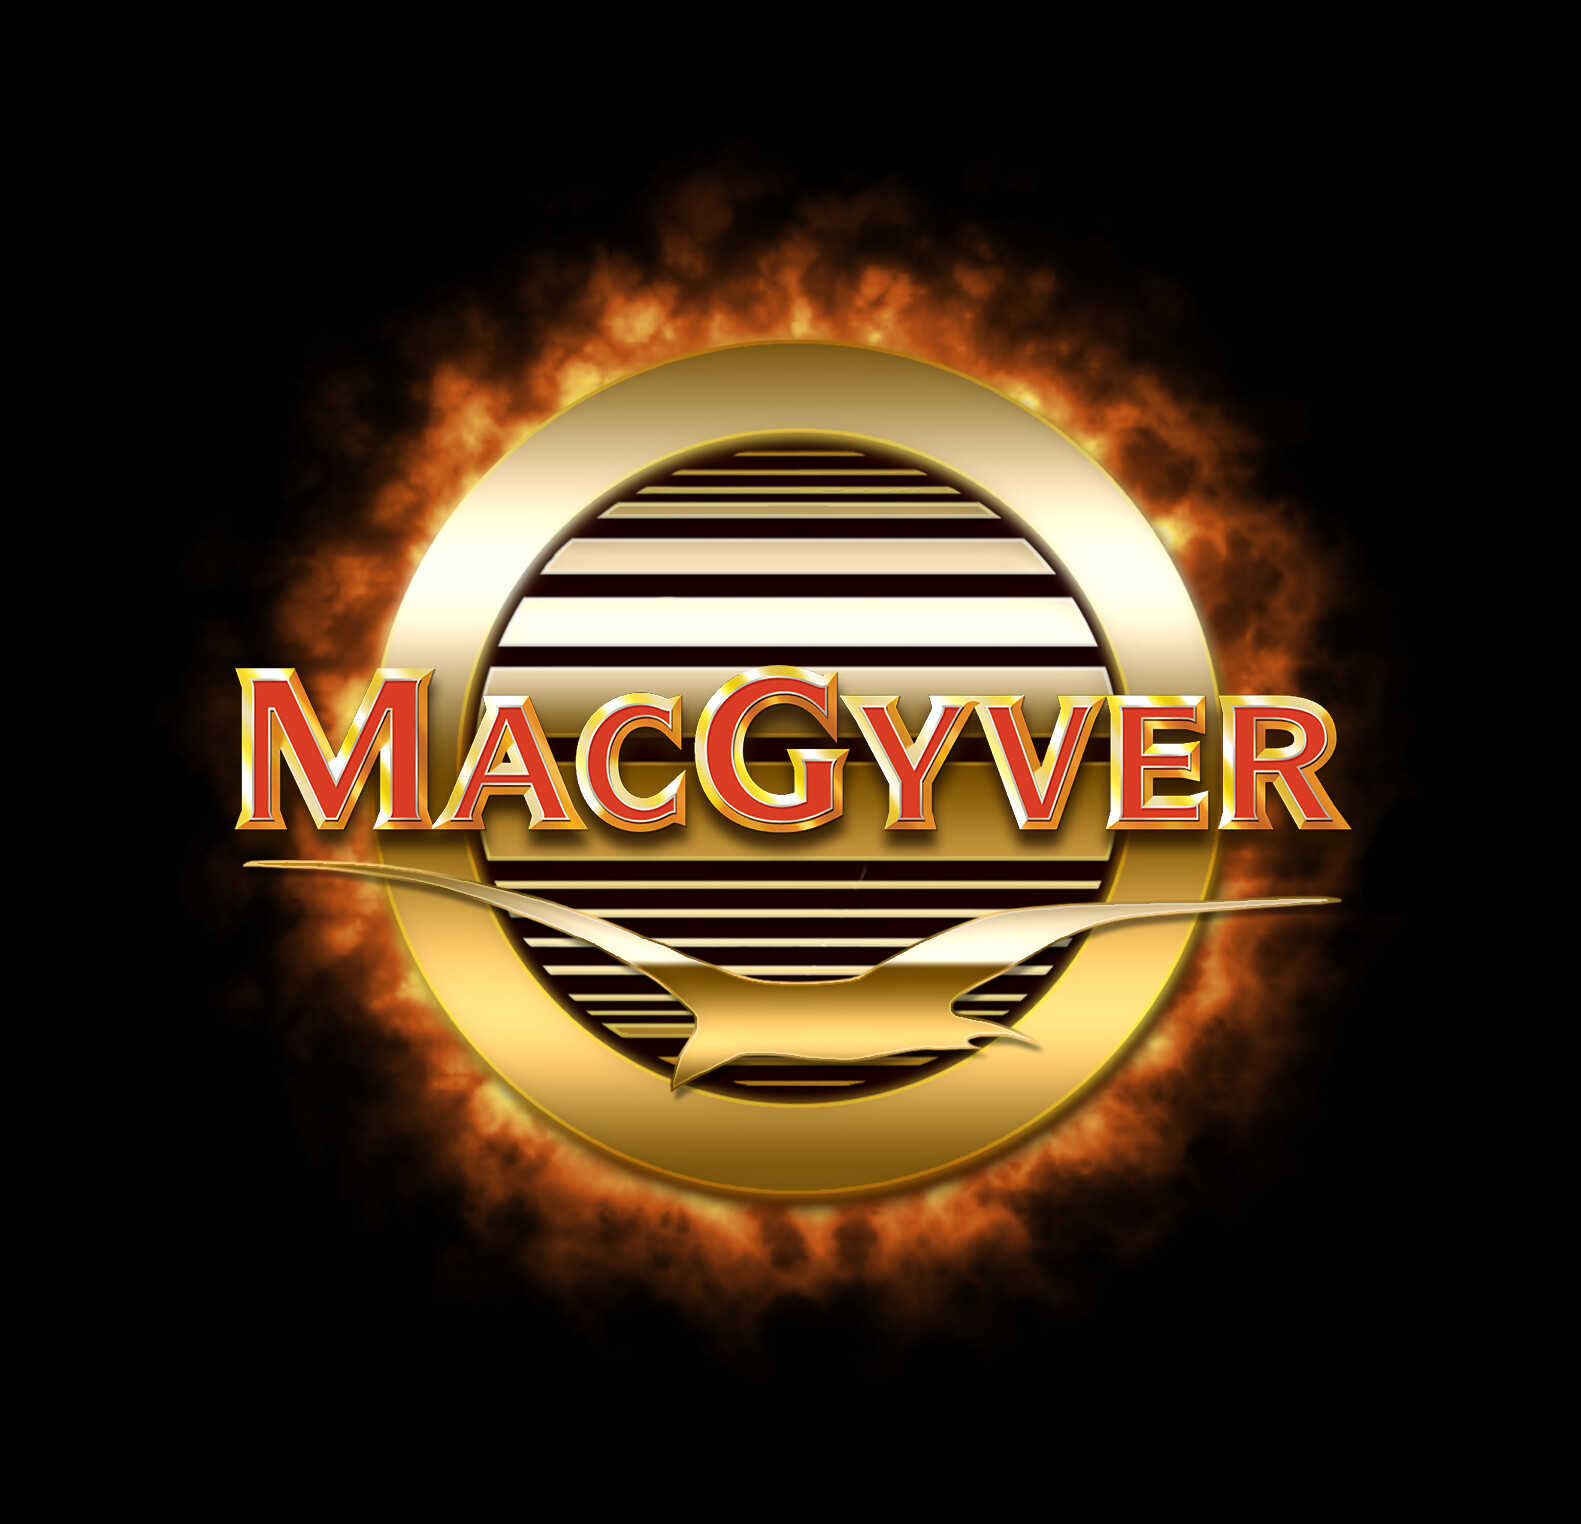 MacGyver WILD symbol